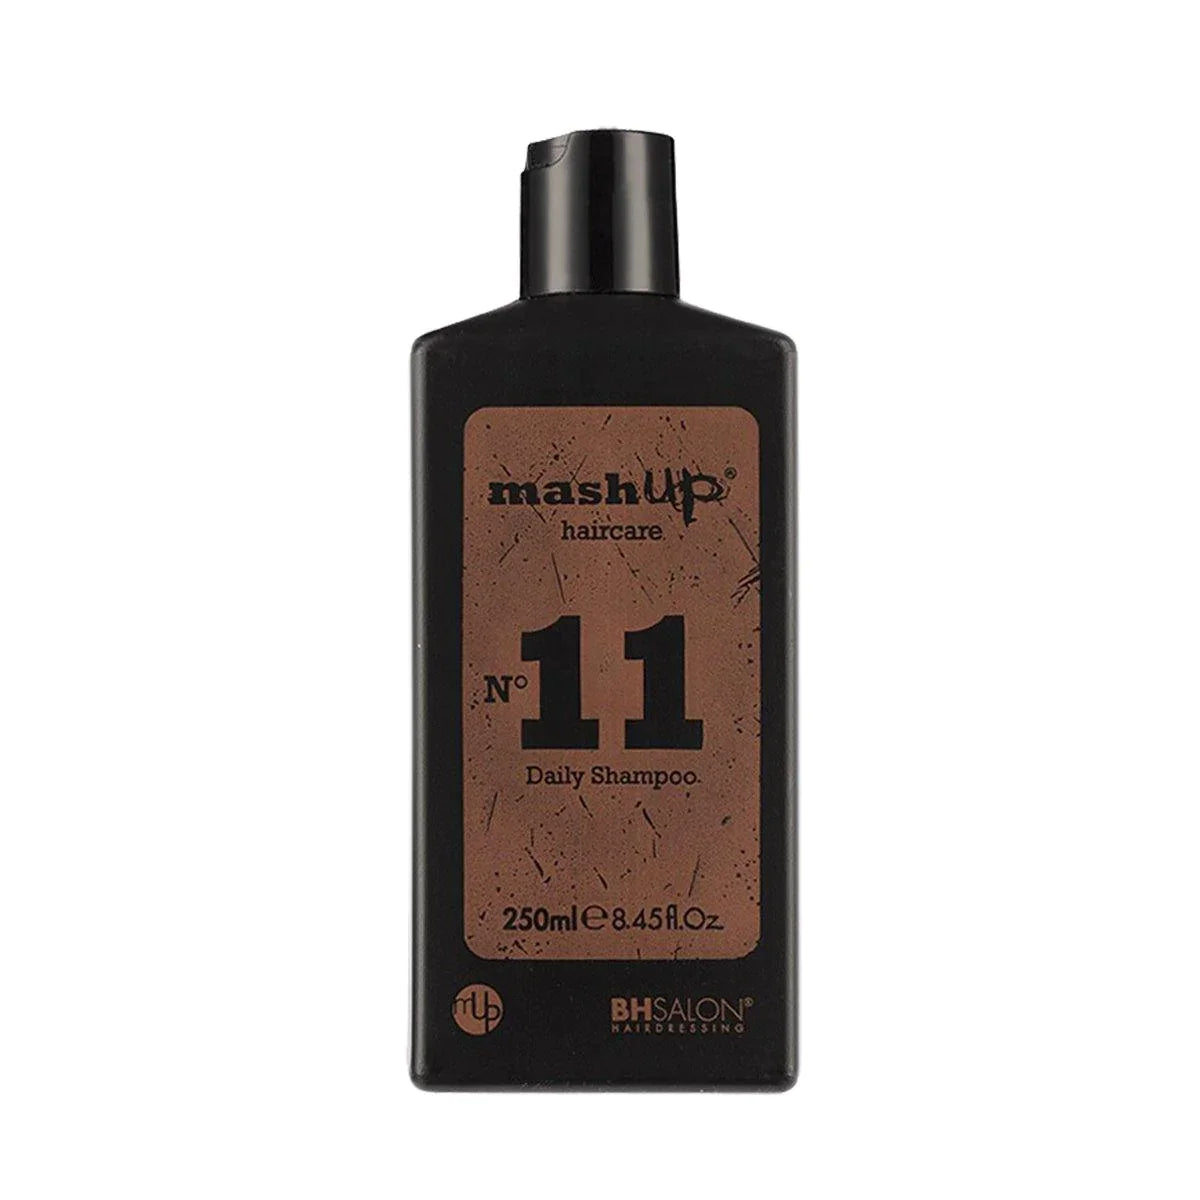 MASHUPHAIRCARE-N11-SHAMPOO-GENTLESHAMPOO-SHAMPOODELICATO-NOTSSHOP.-Lo Shampoo MASHUP-Shampoo ideale per una cute sensibile-shampoo lenitivo, idratante, protettivo.